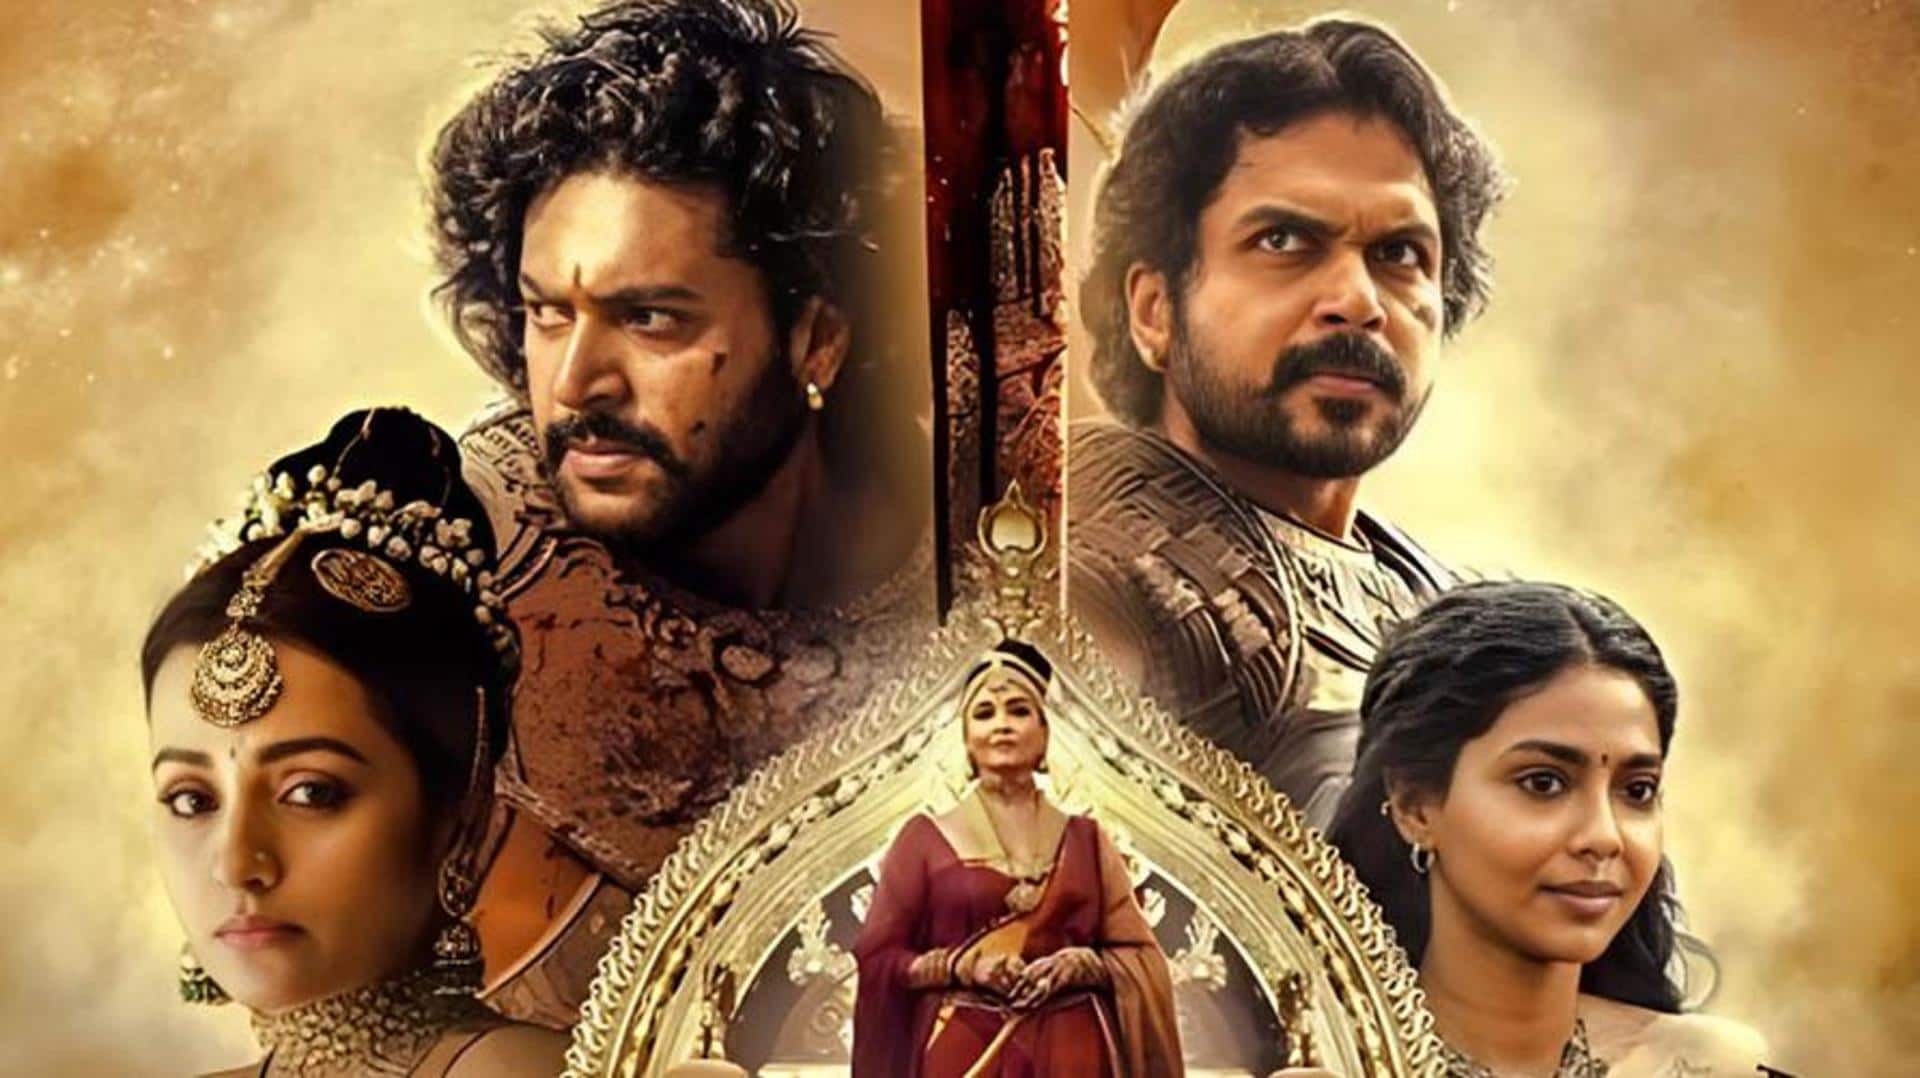 Box office: 'Ponniyin Selvan: II' is slow yet steady